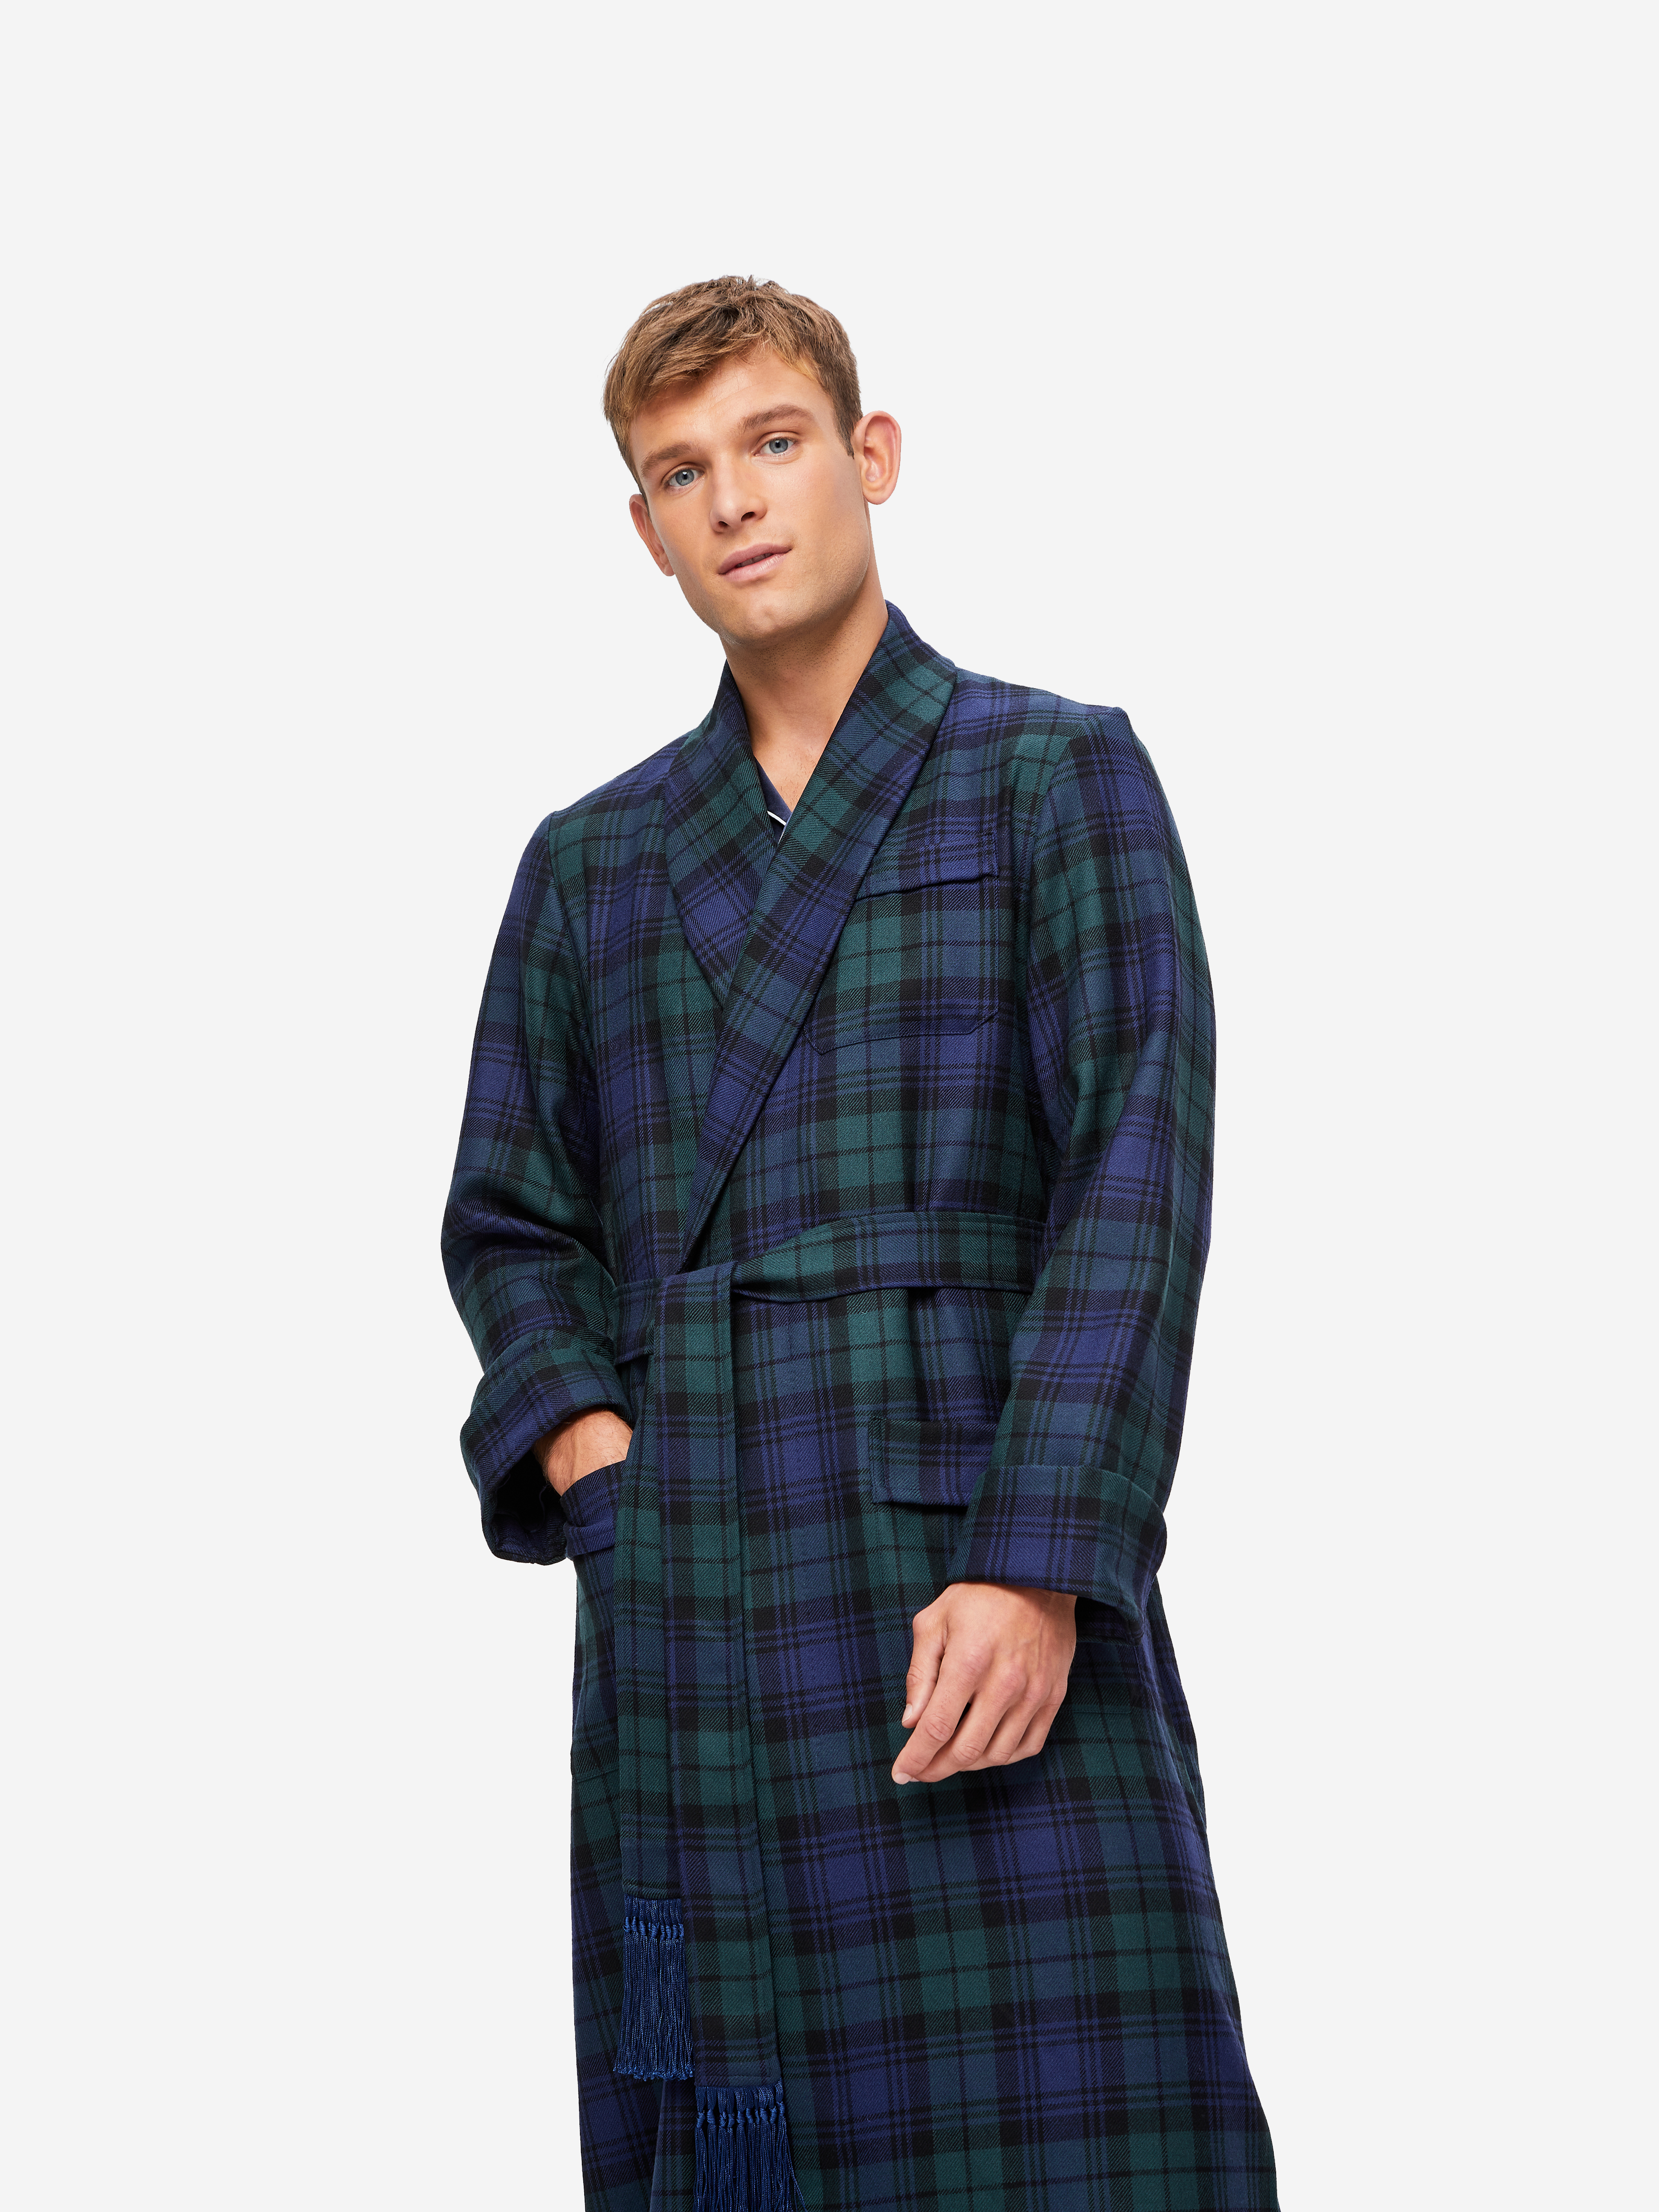 Dueffe Men's Dressing Gown Wool Blend Very Soft and Warm Art. Versacea -  Grey - XXXXL : Amazon.co.uk: Fashion